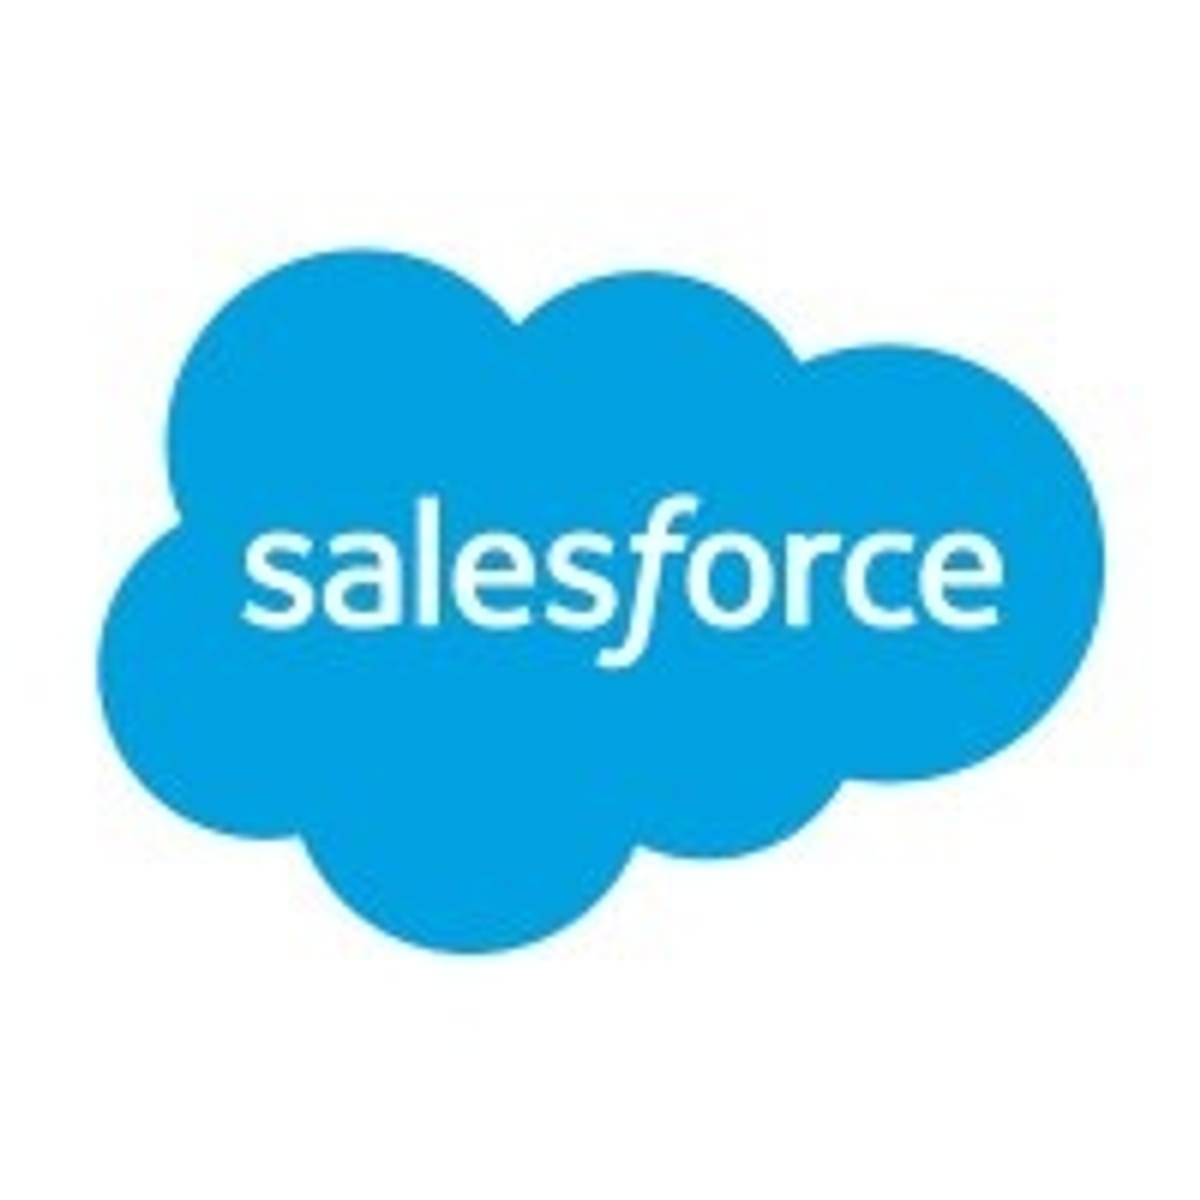 Funda kiest Salesforce om digitale transformatieproces te versnellen image